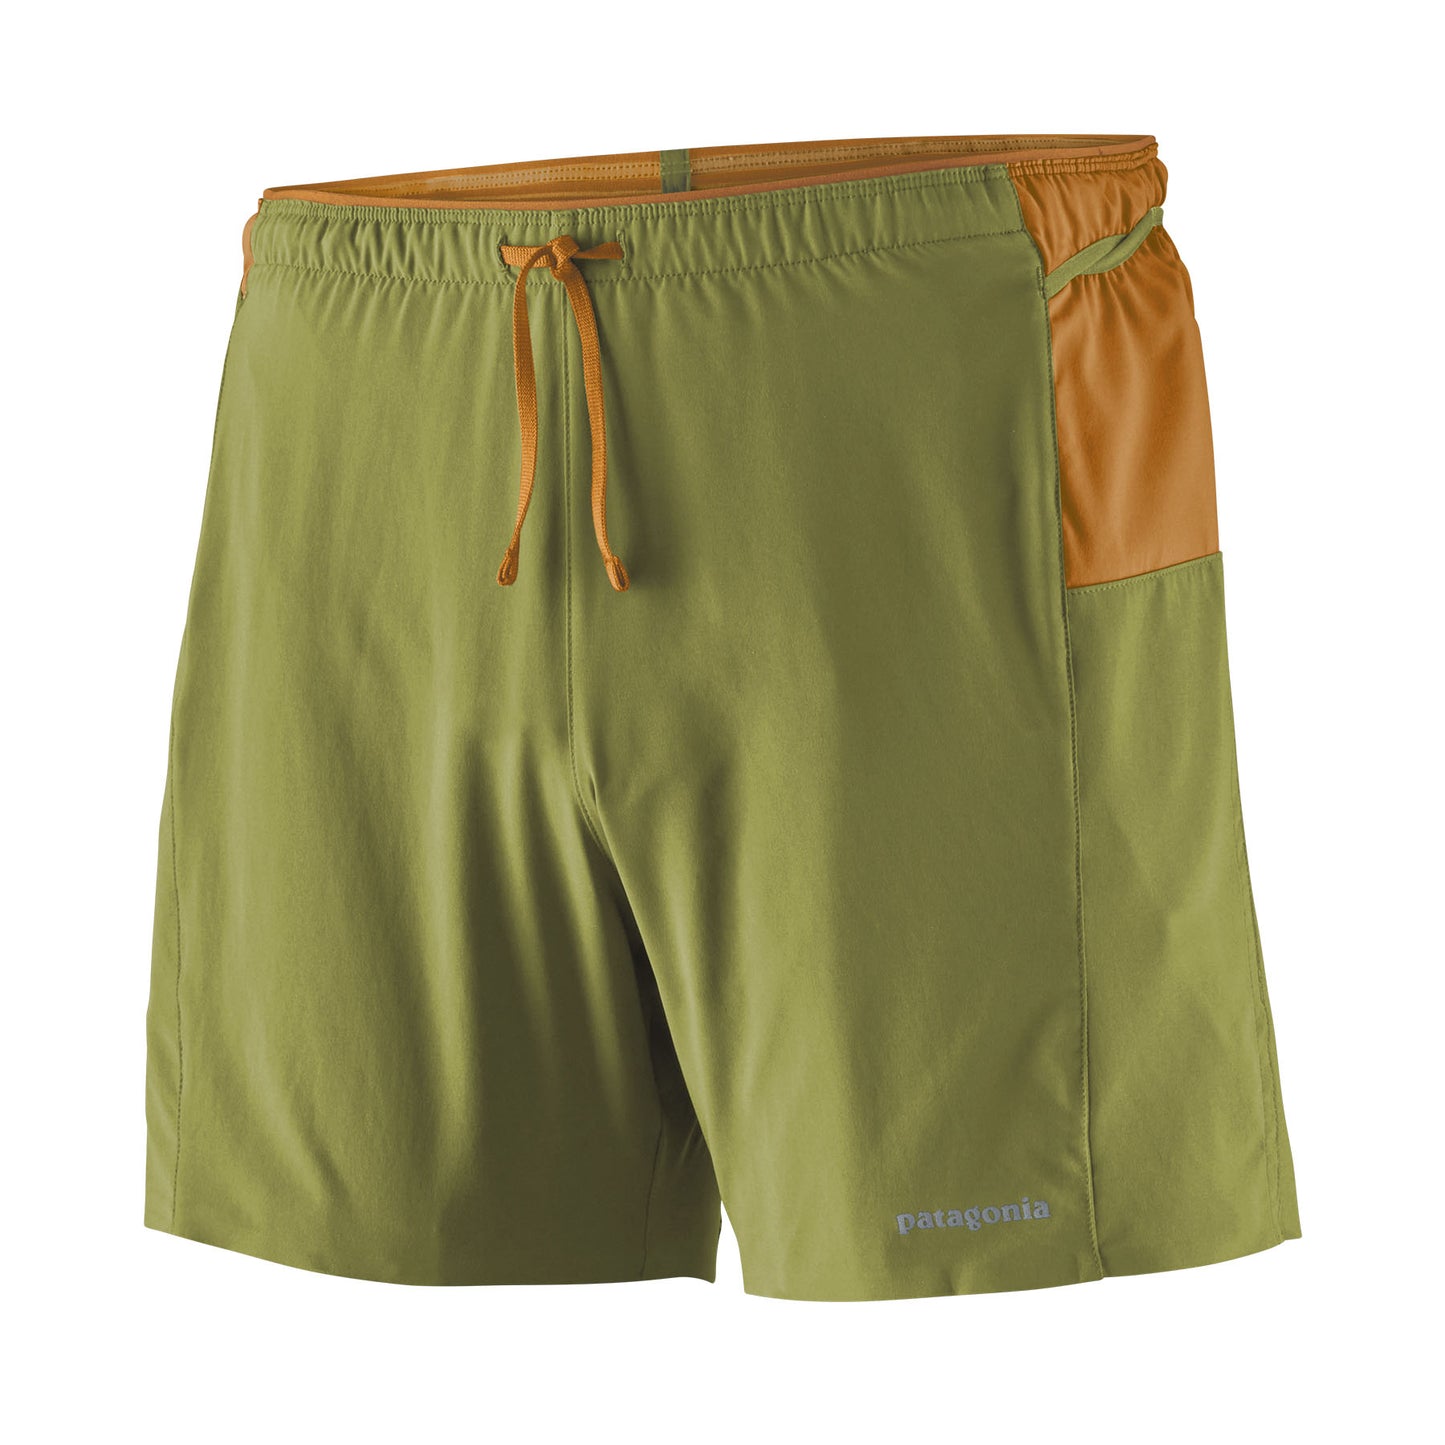 Patagonia®男款 Strider Pro Shorts - 5"